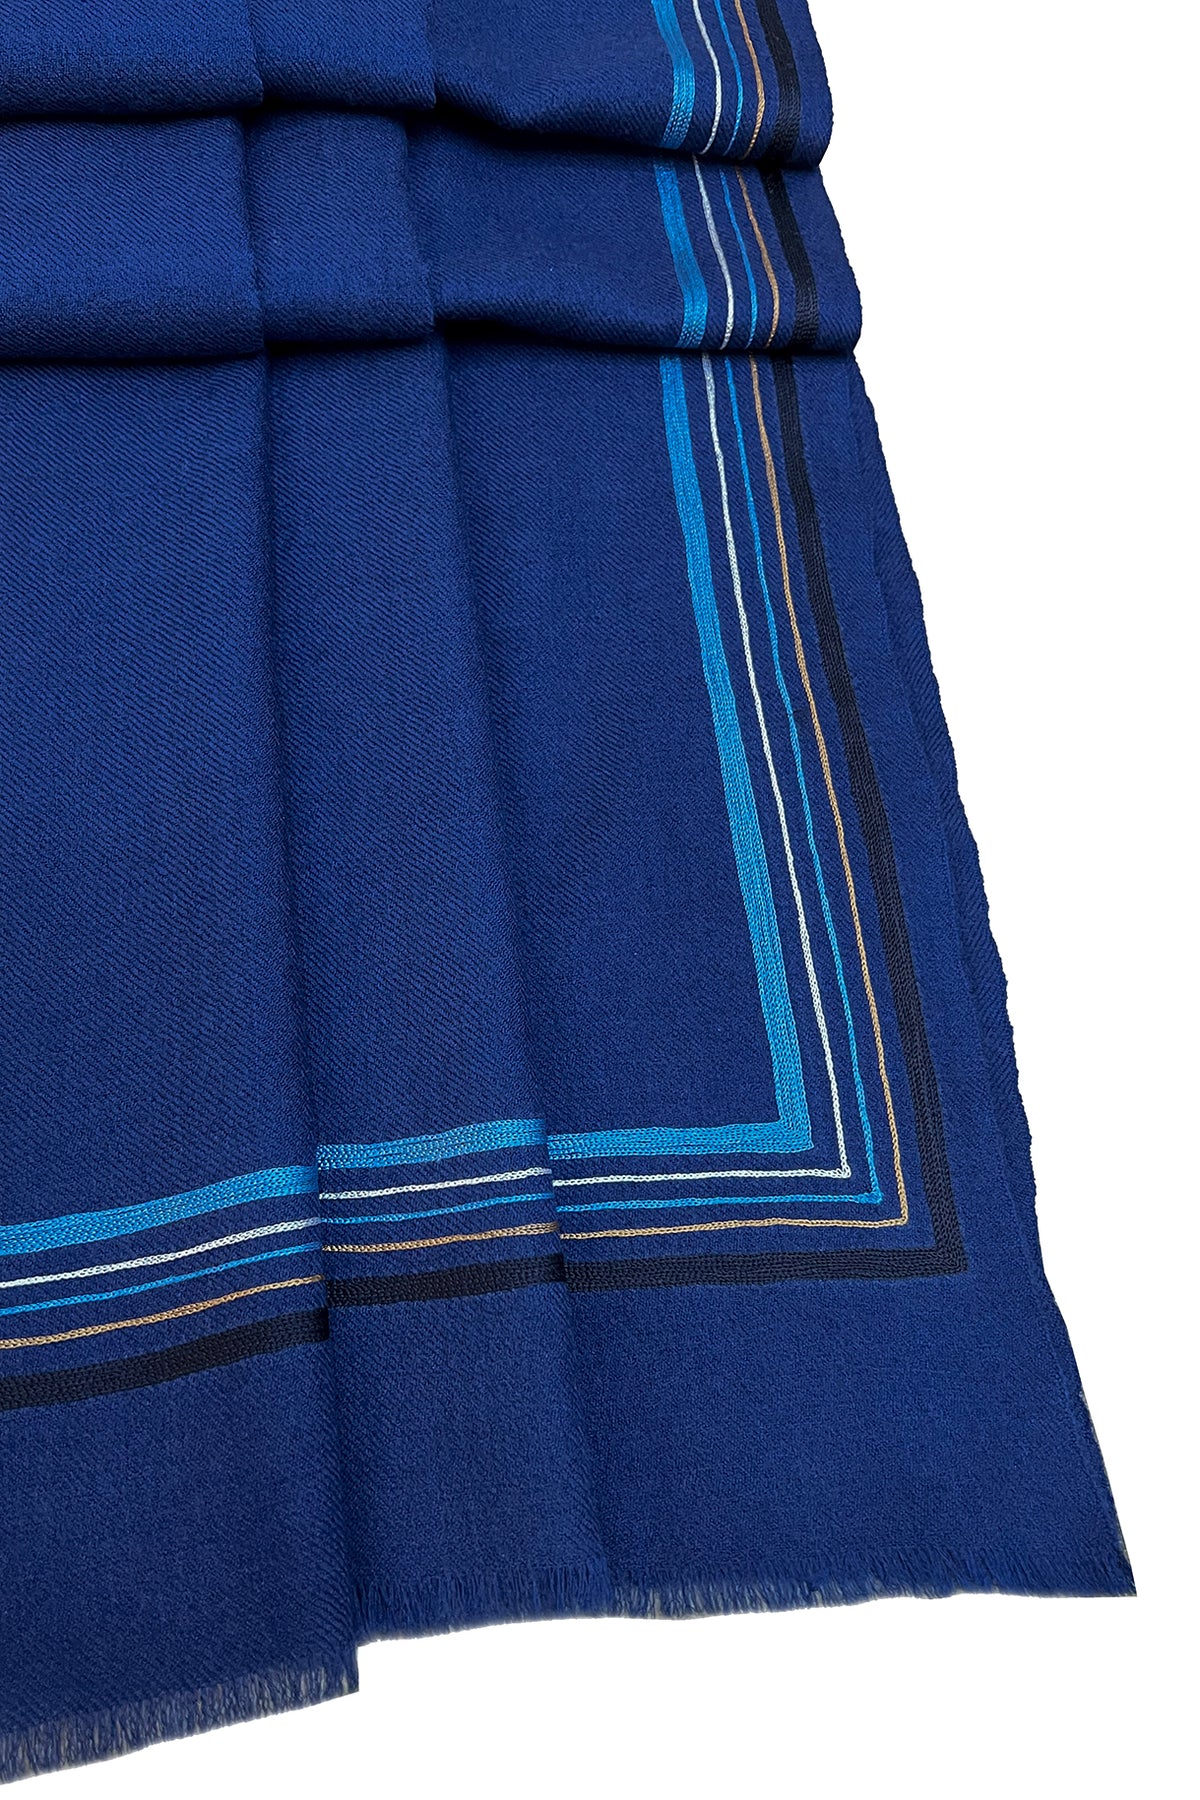 Embroidered Fine Wool Silk Stole Blue